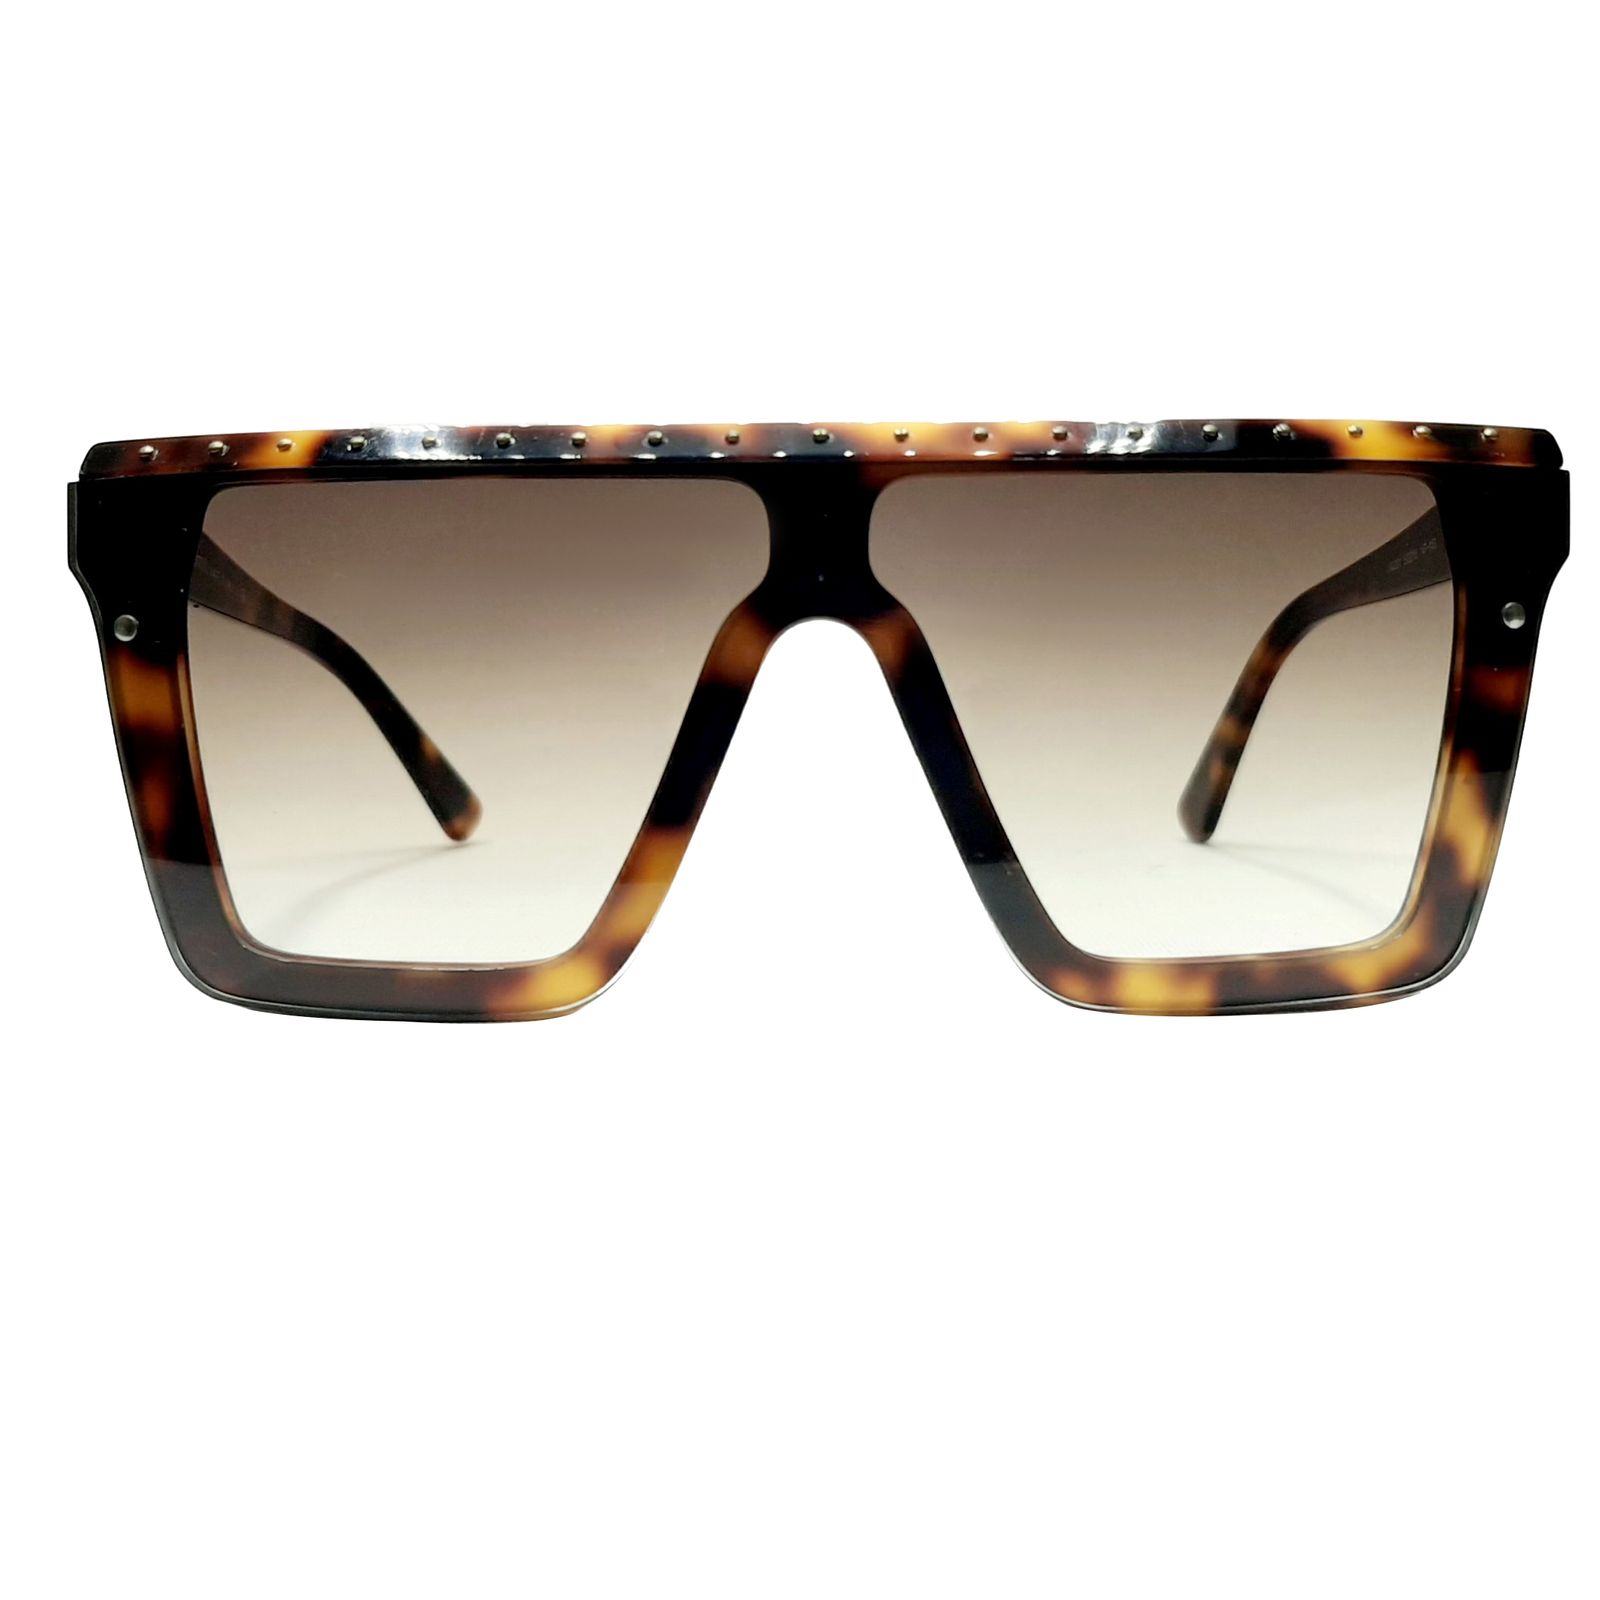 عینک آفتابی والنتینو مدل VA3201500213